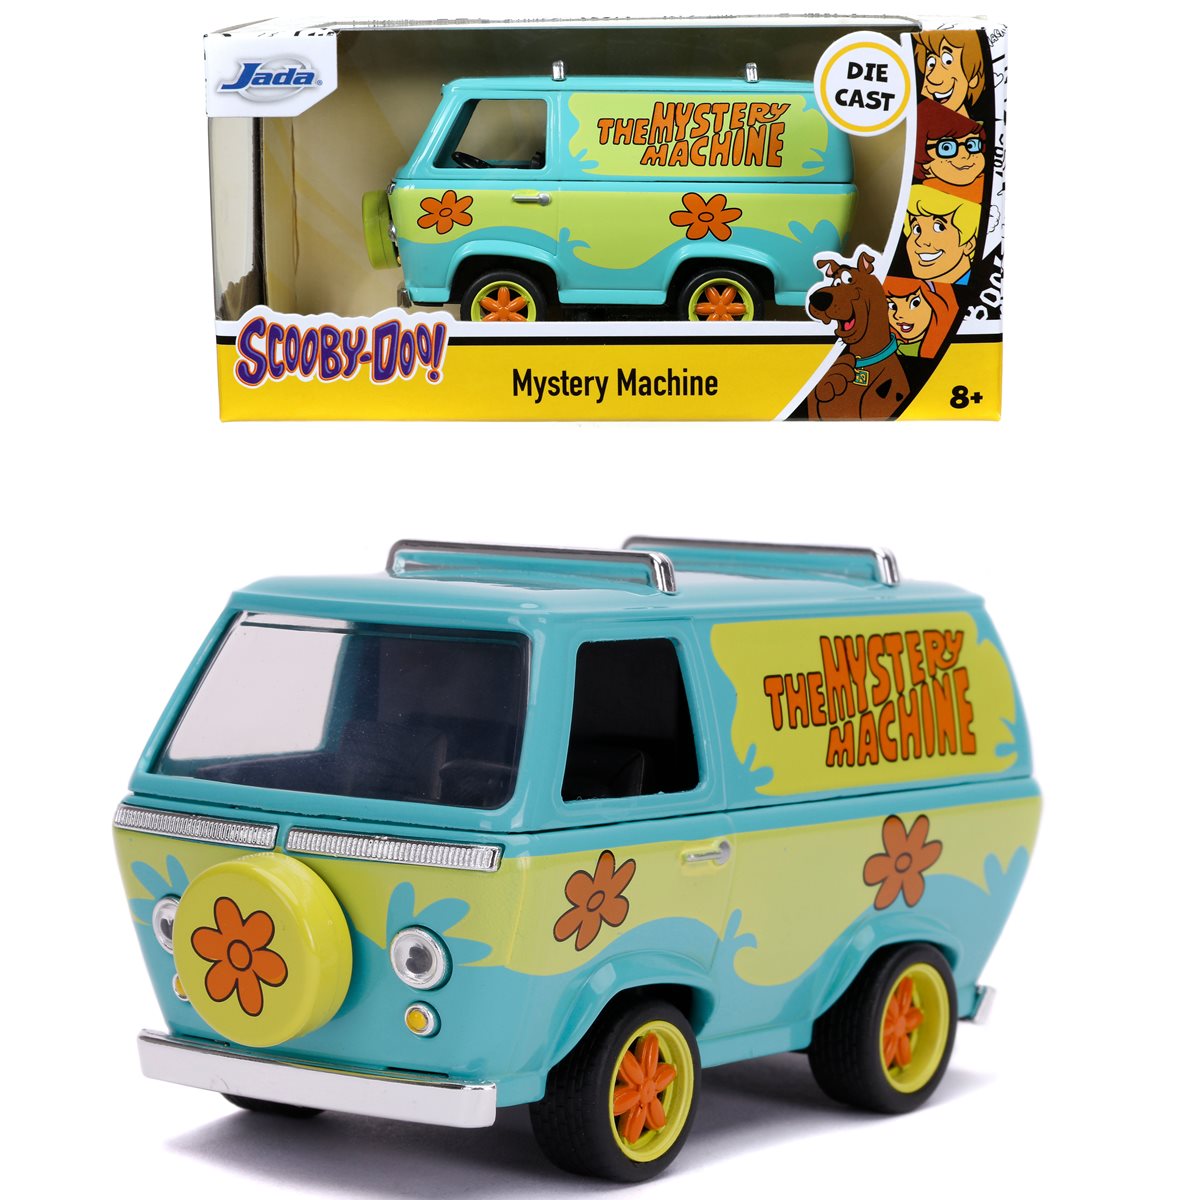 Scooby-Doo - Jada - 1:24 scale die-cast Mystery Machine with Shaggy &  Scooby-Doo